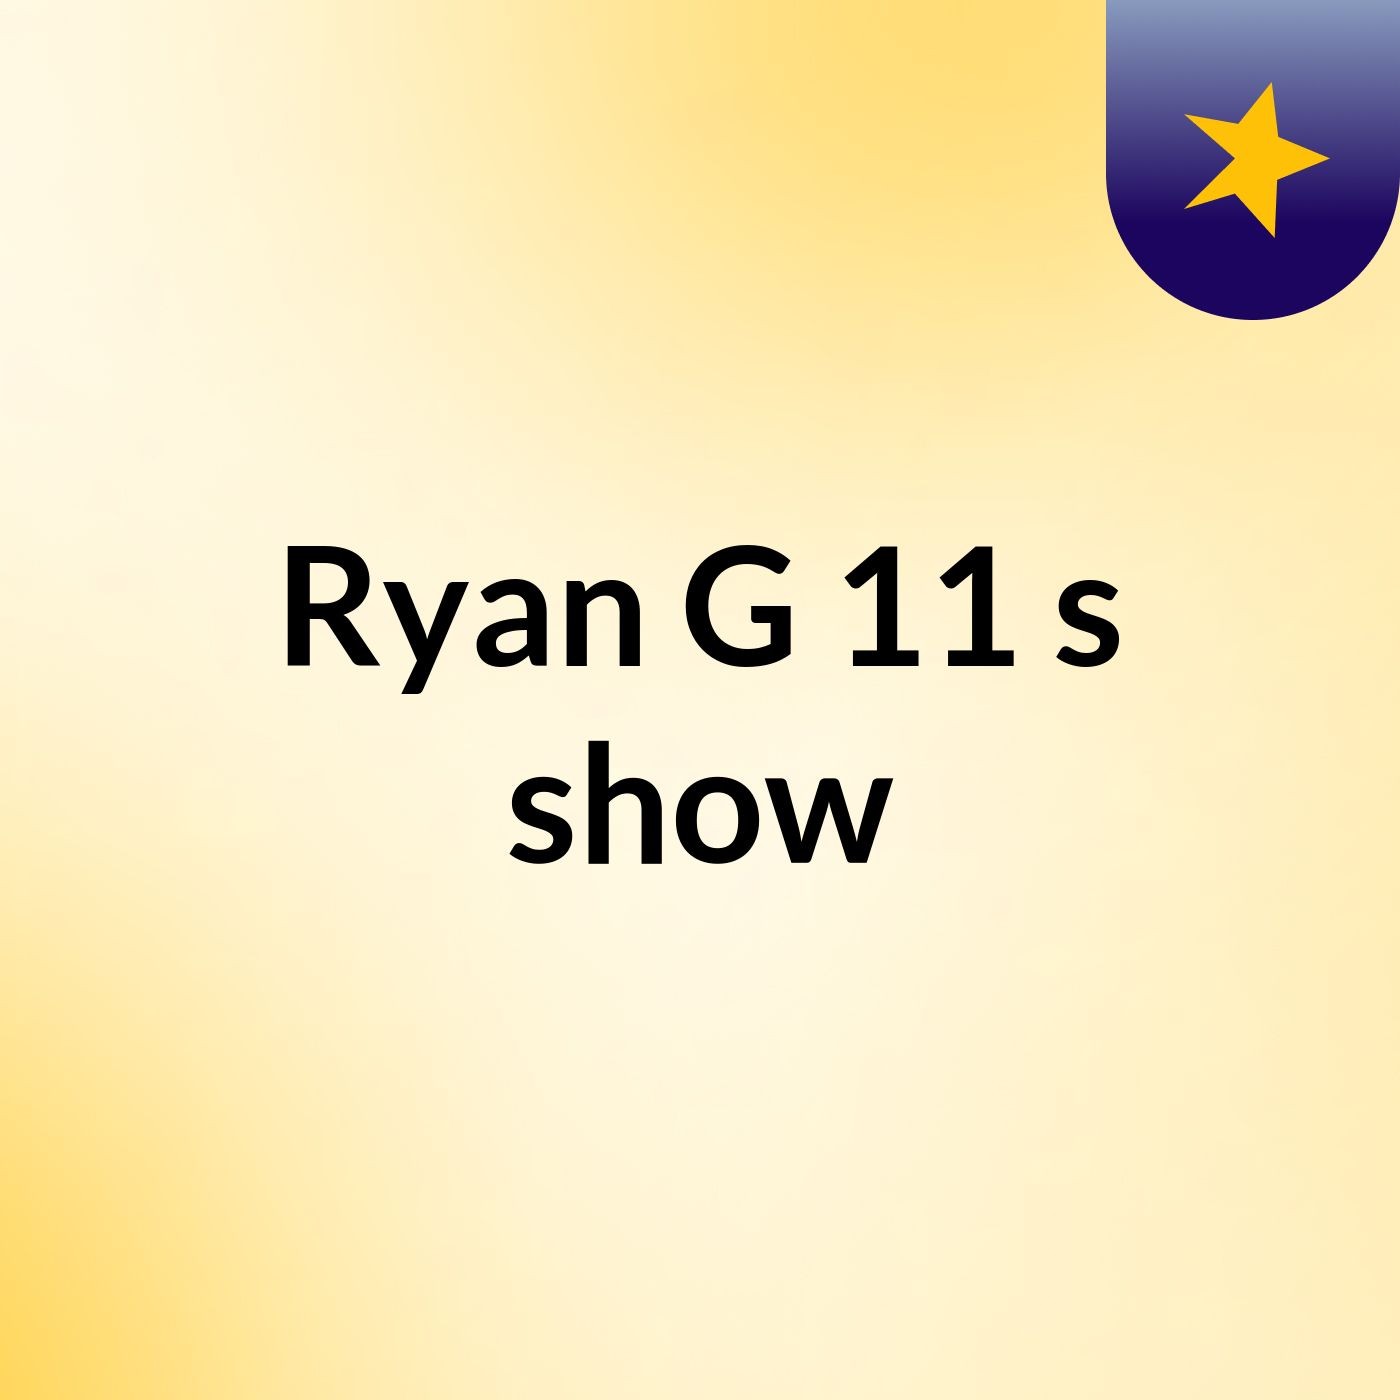 Ryan G 11's show